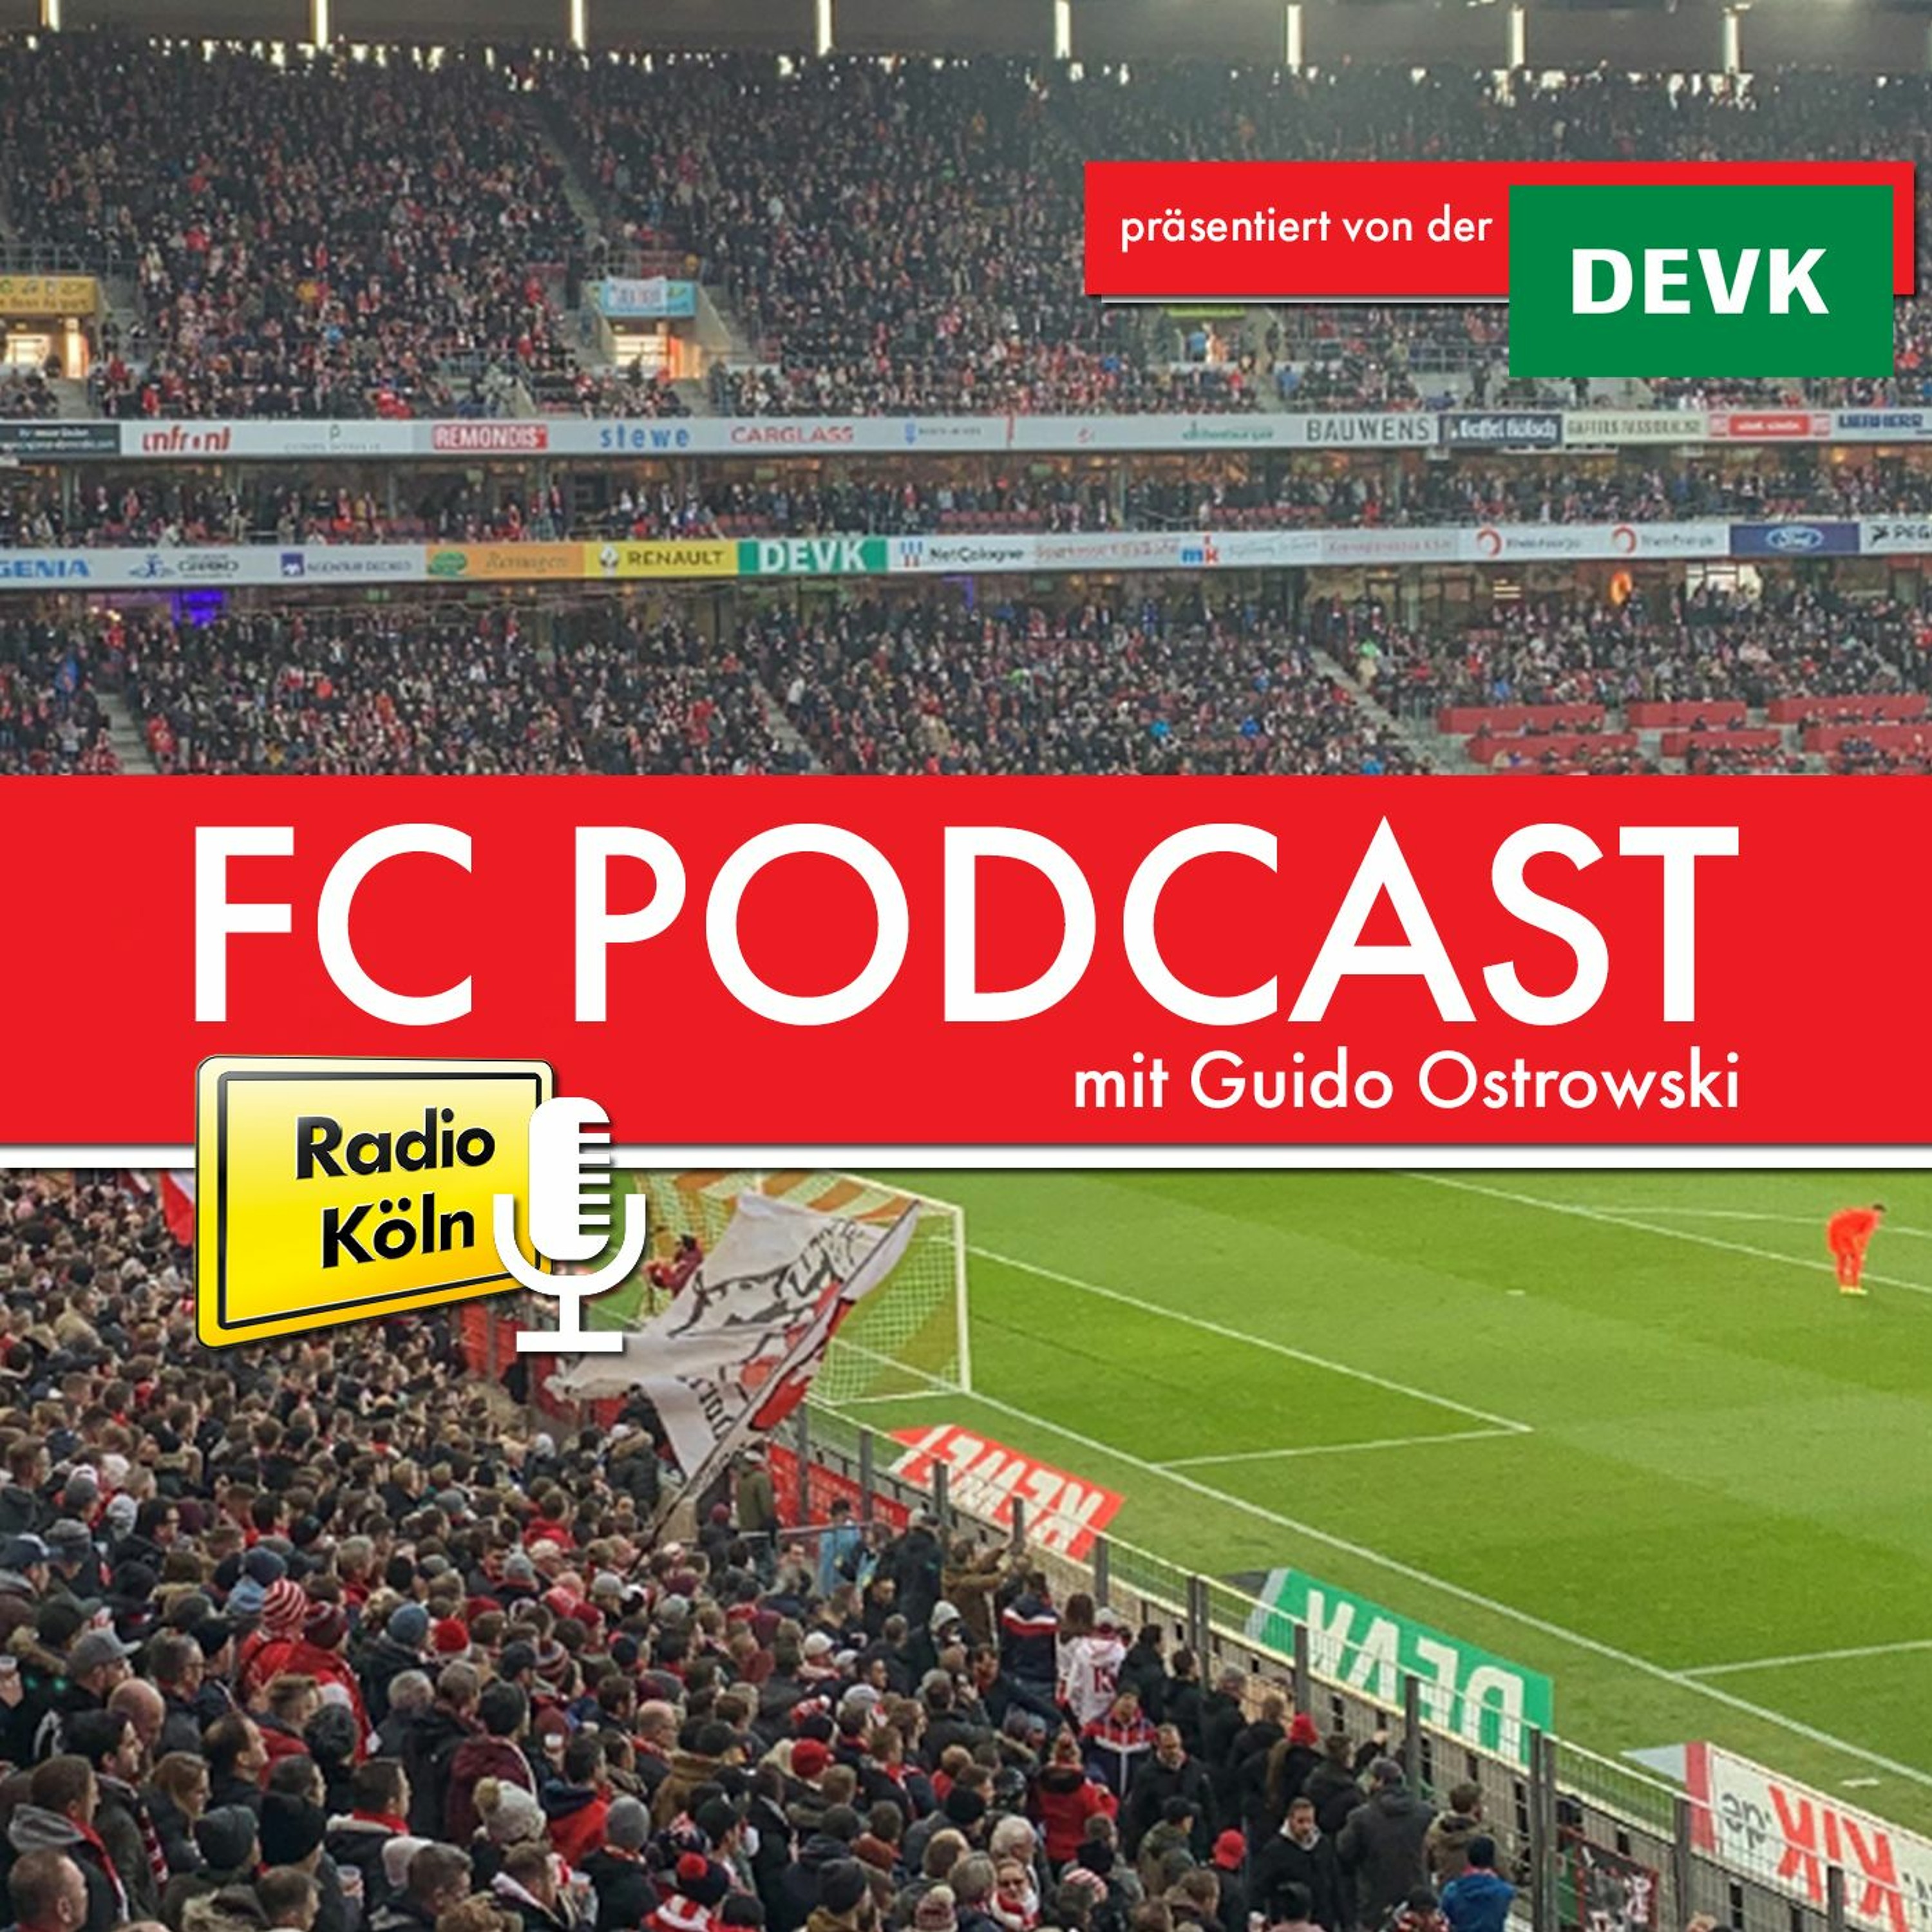 Radio Köln 107,1 FC-Podcast | Podcast kostenlos online hören